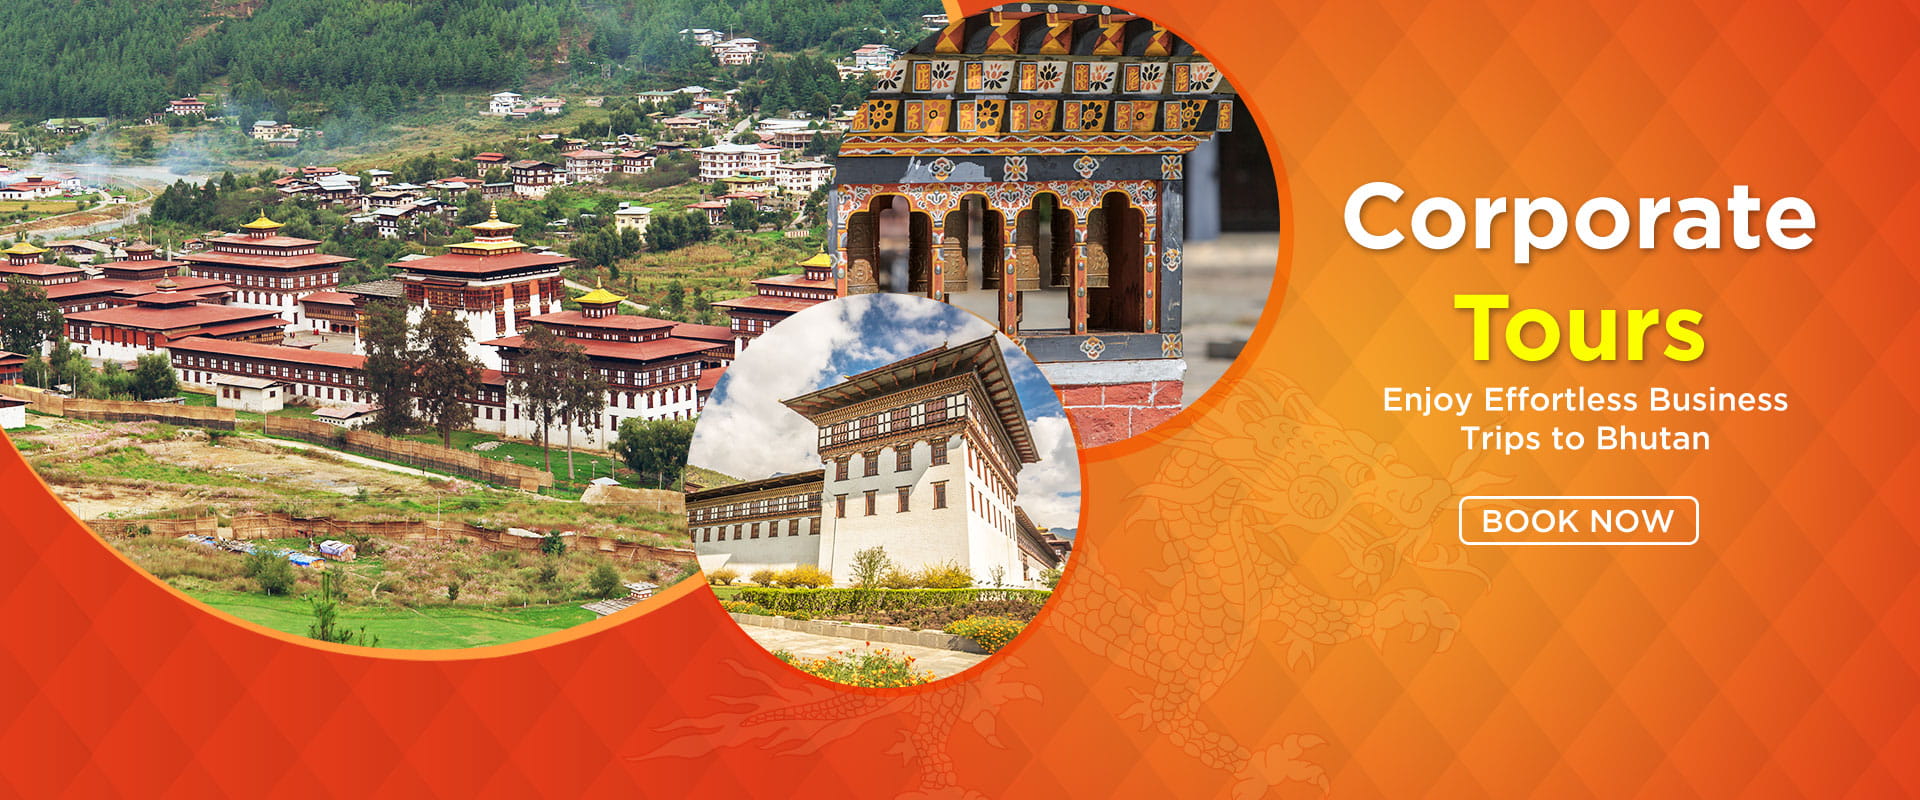 Plan Your Corporate Tour to Bhutan